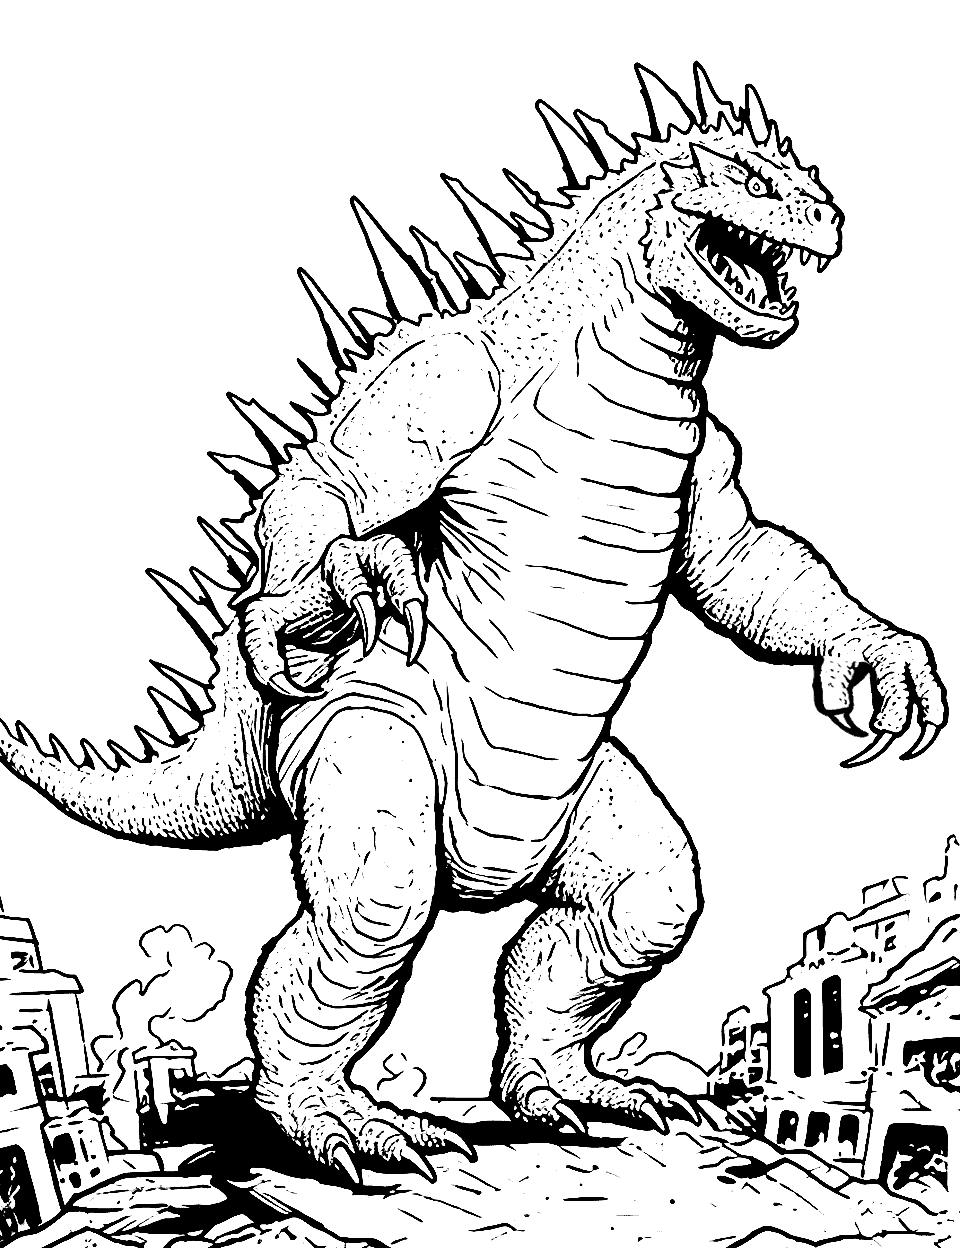 Original Godzilla Stance Coloring Page - The first Godzilla from 1954, its presence felt amidst ruins.